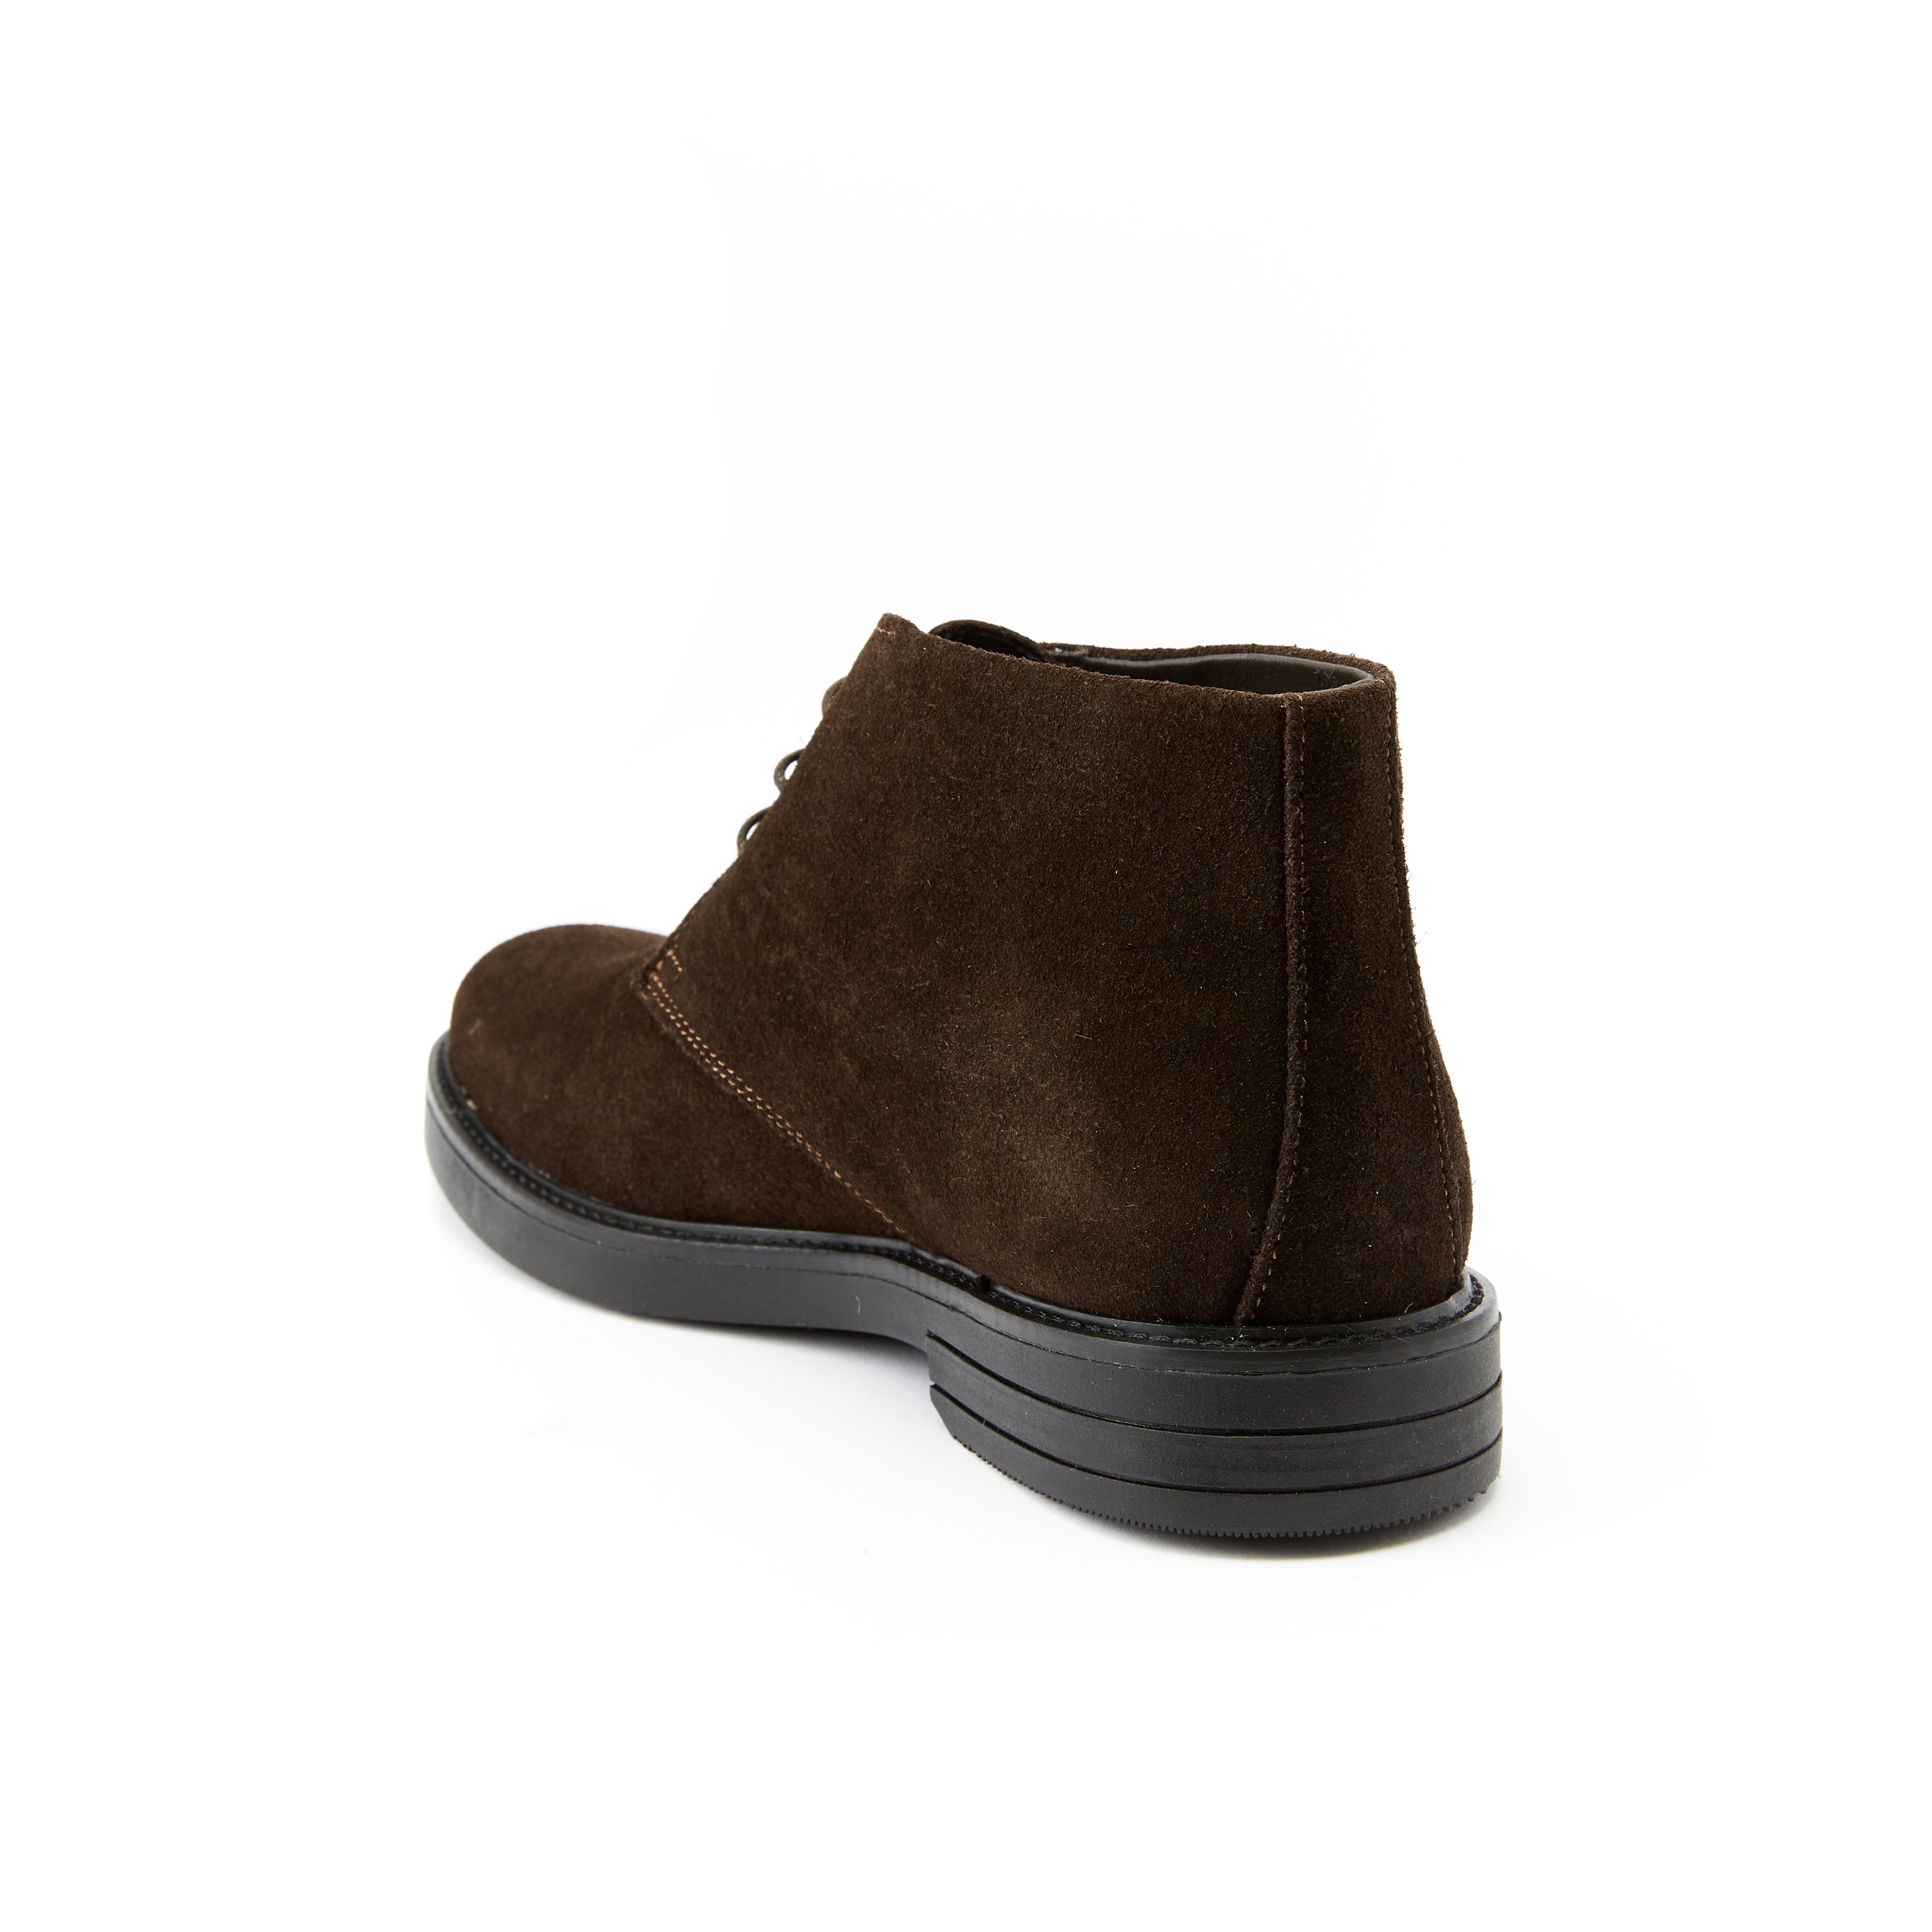 Plain chukka boot dark brown